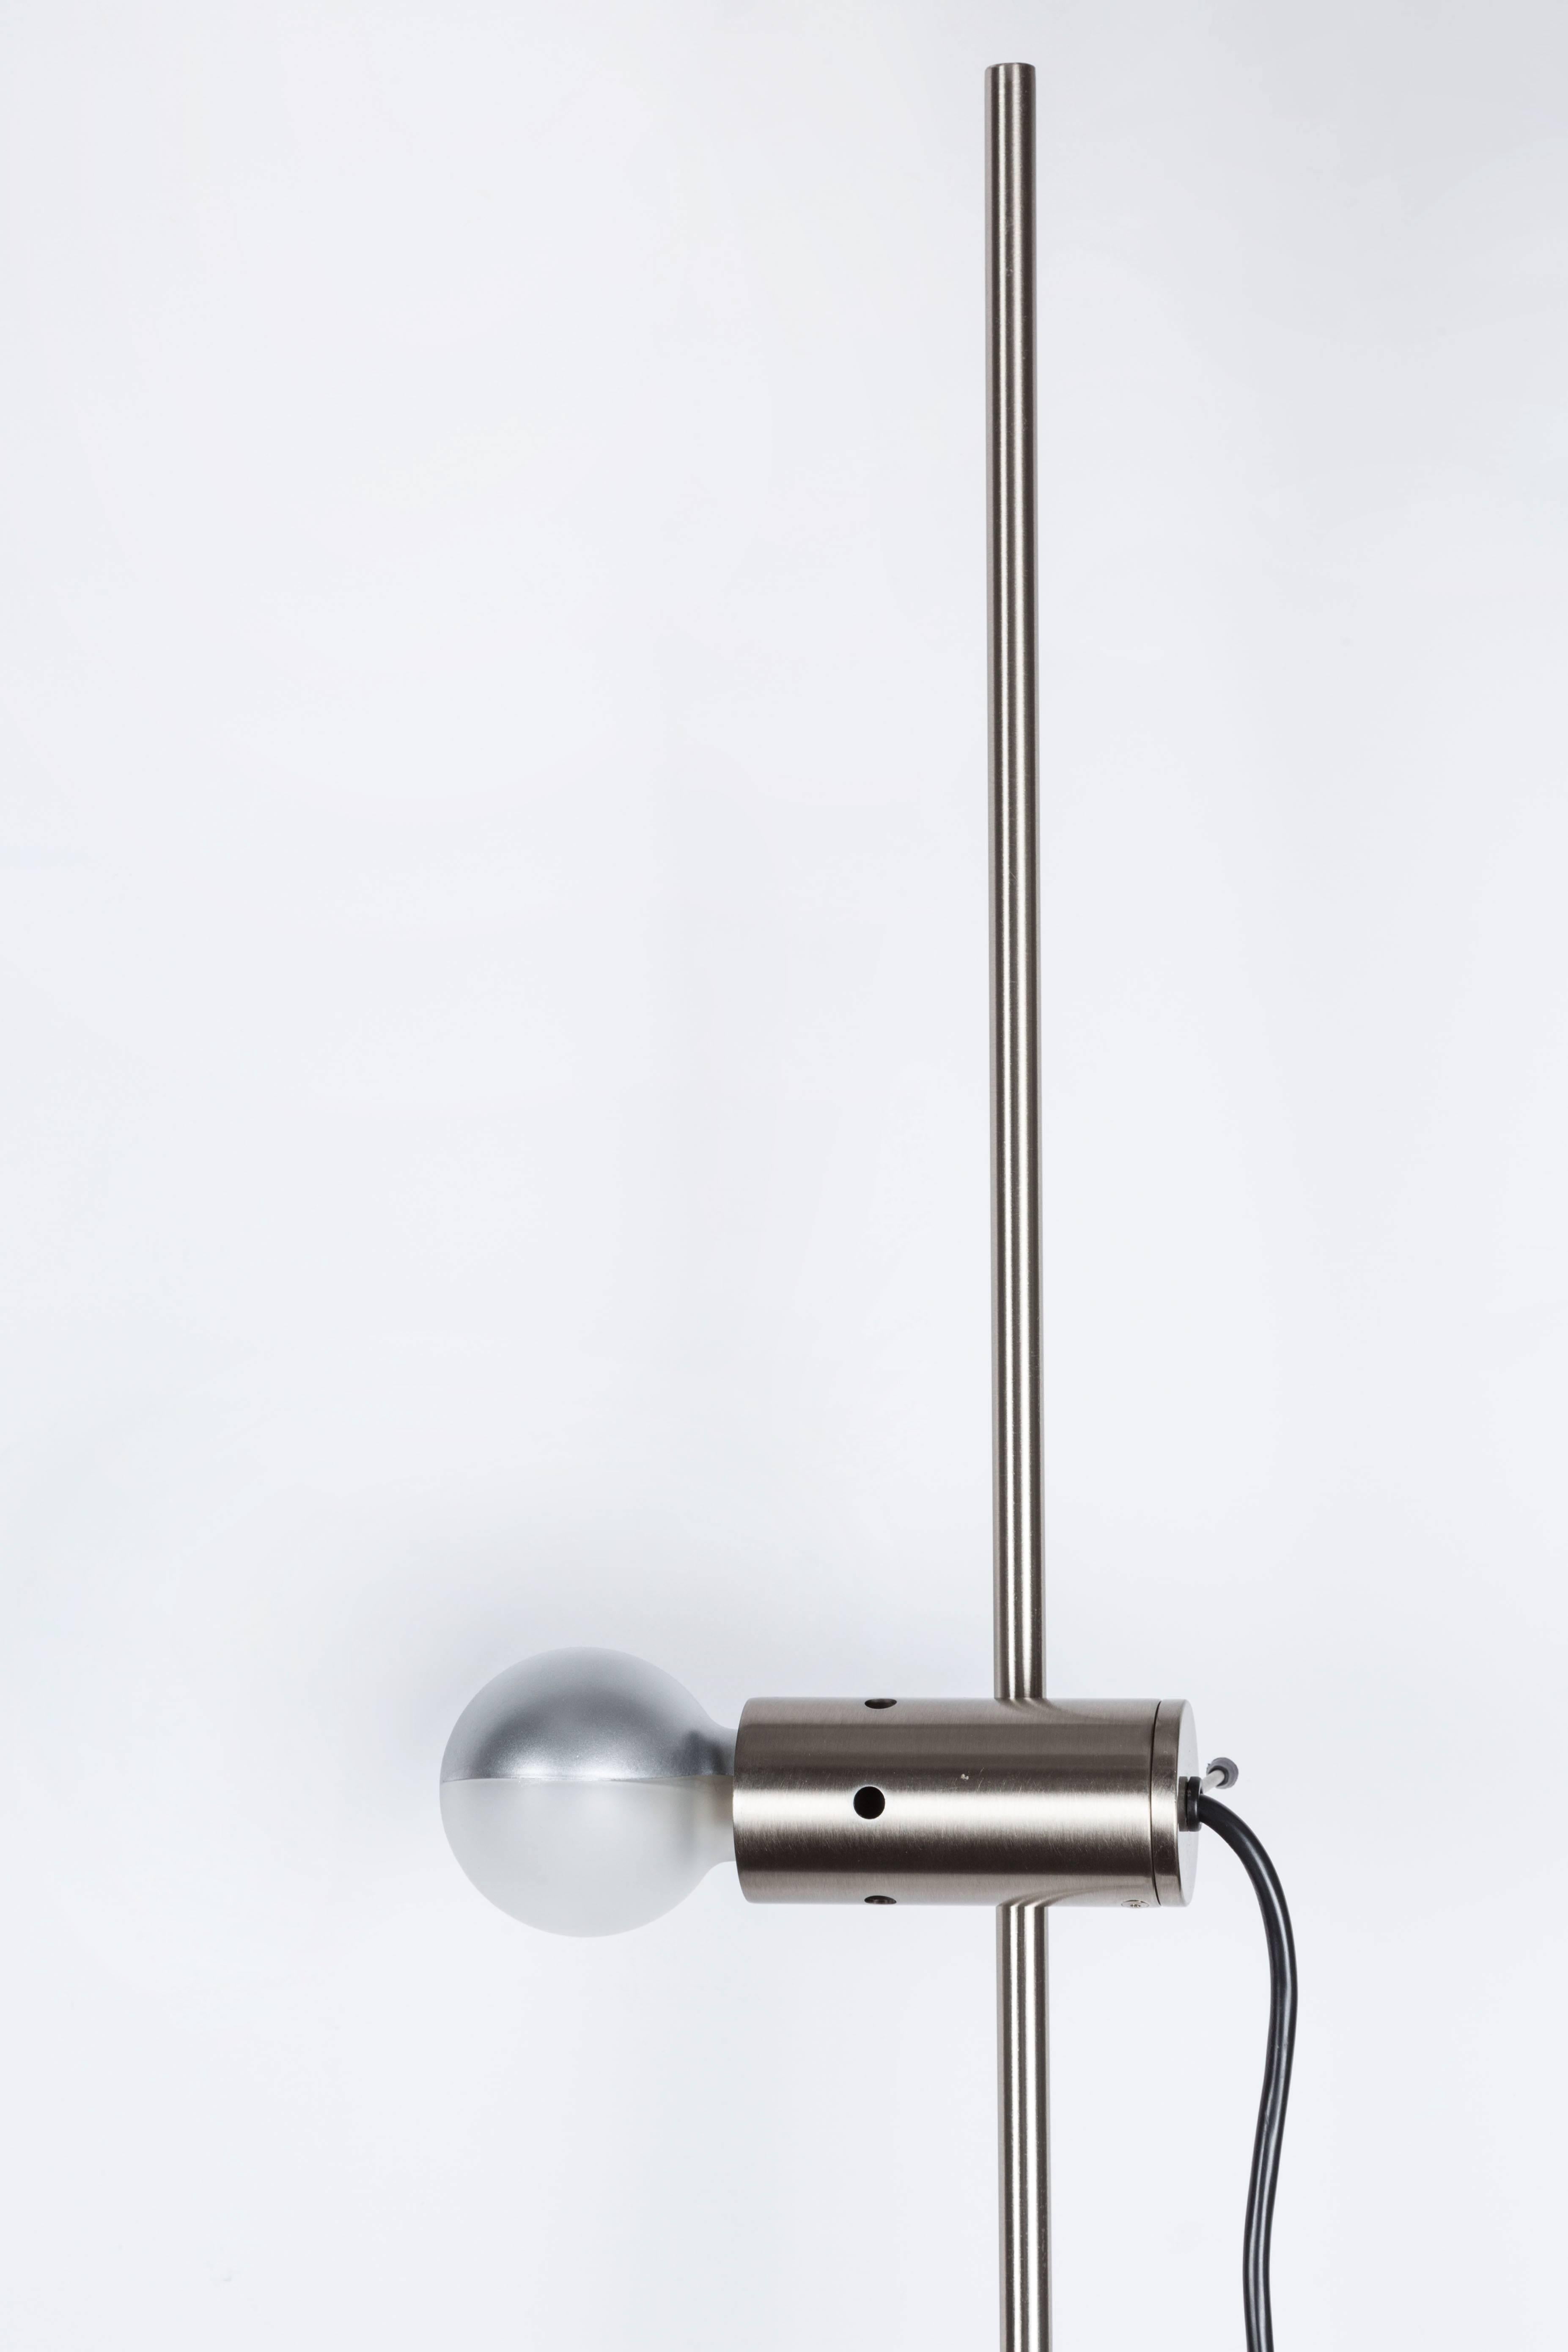 Metal Tito Agnoli Model #387 'Agnoli' Floor Lamp in Nickel and Travertine for Oluce For Sale